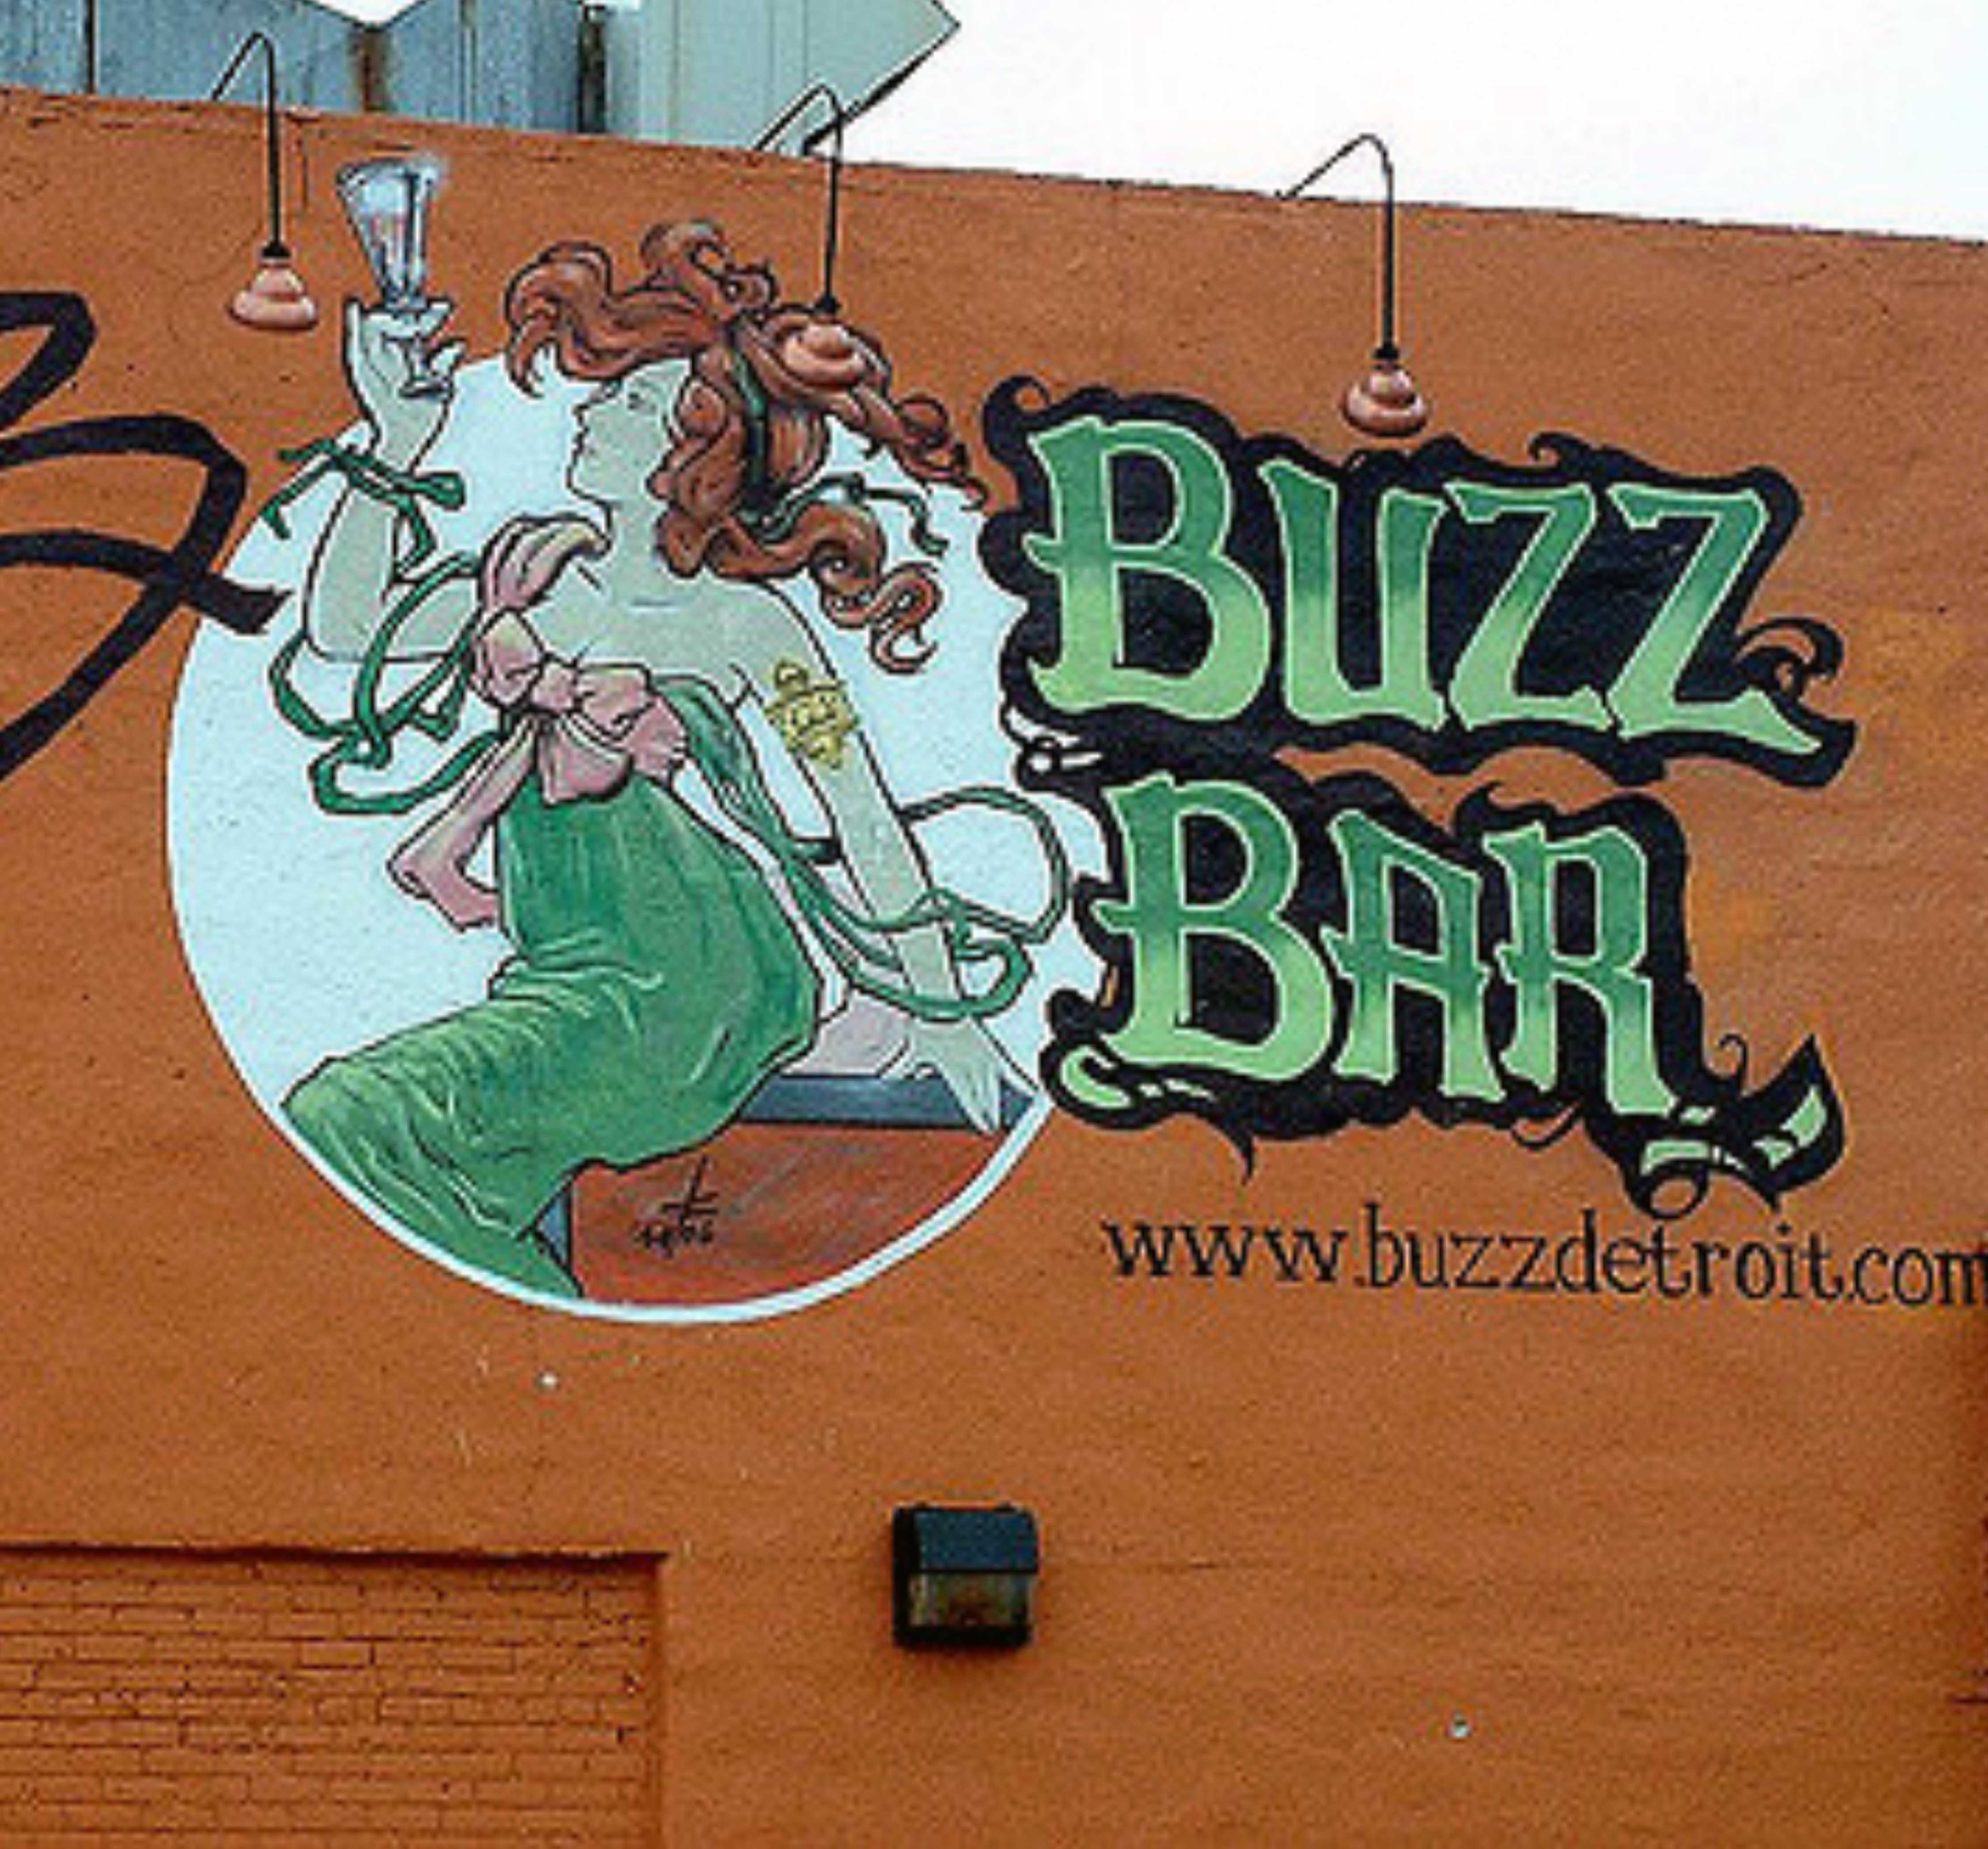 Buzz Bar